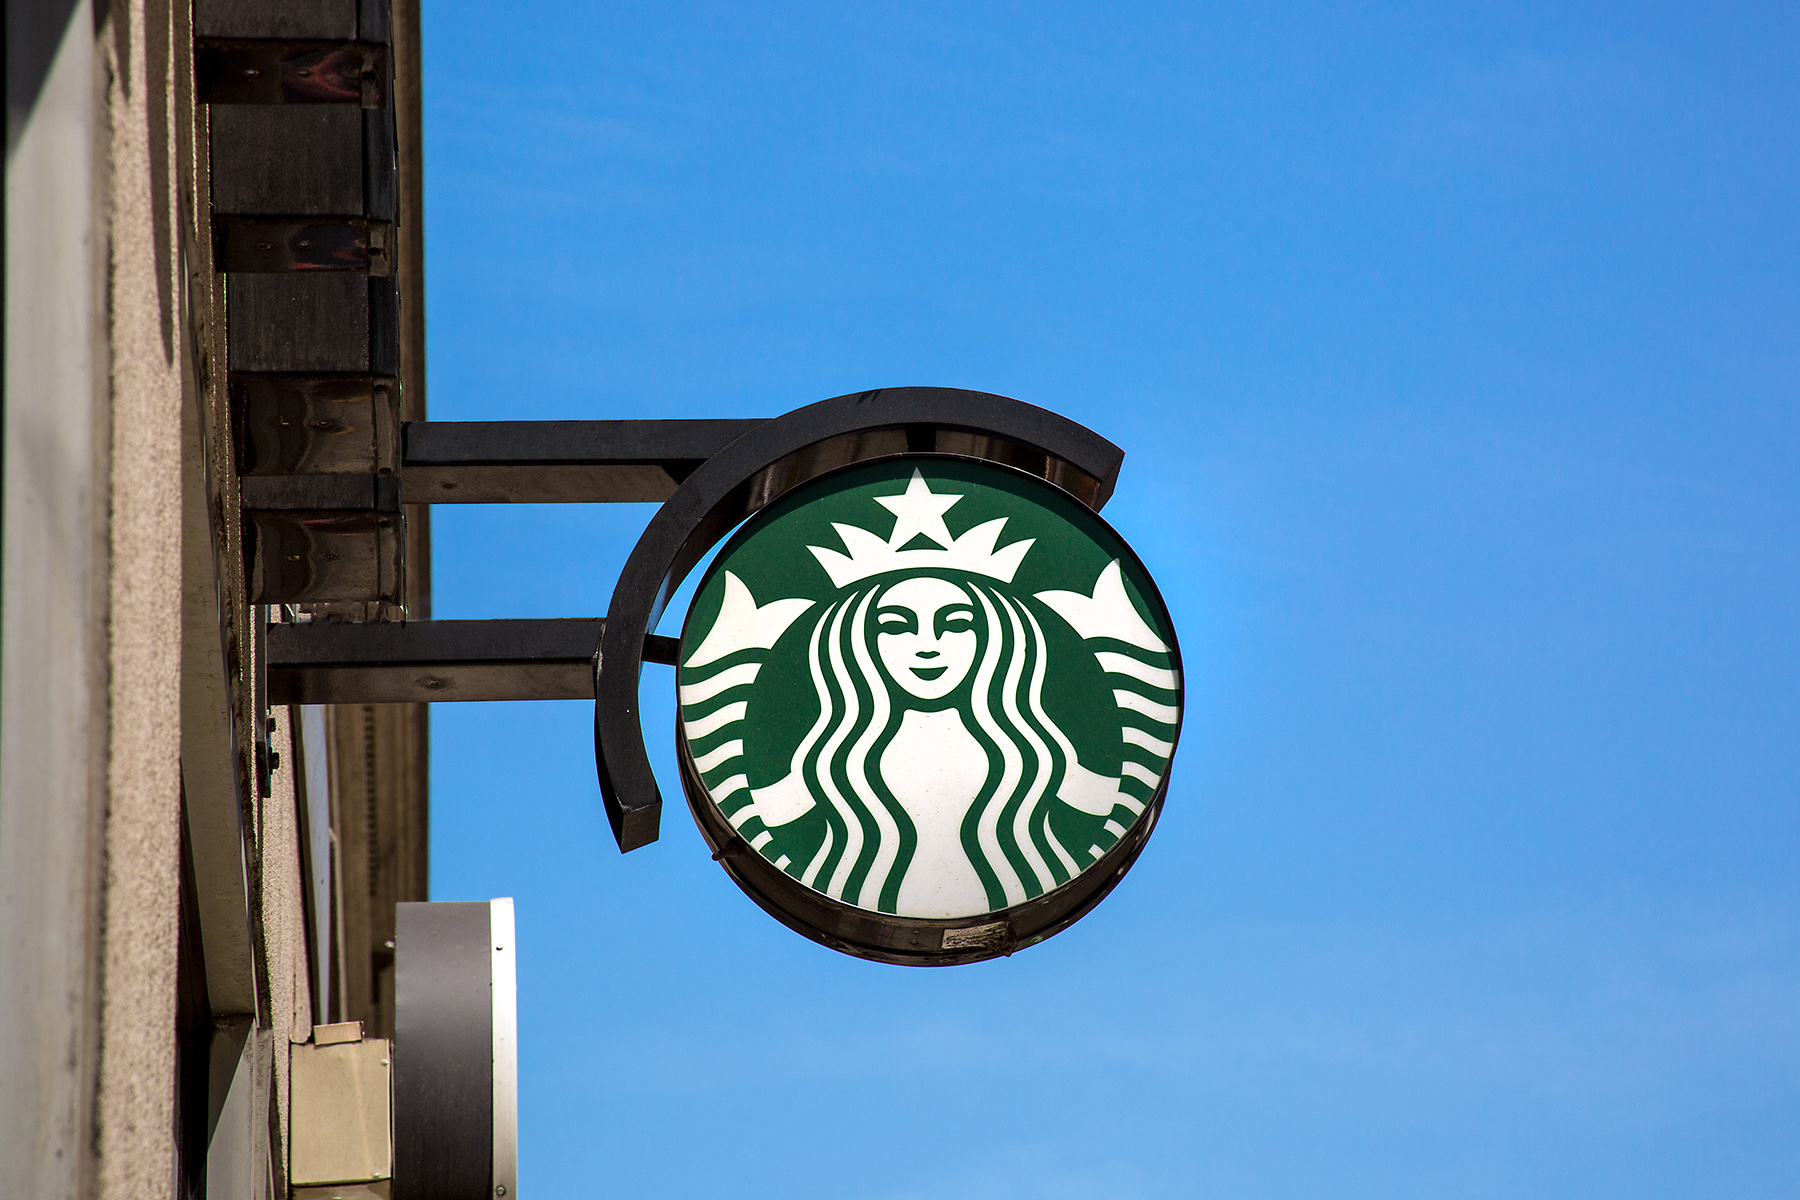 Starbucks Building Signage